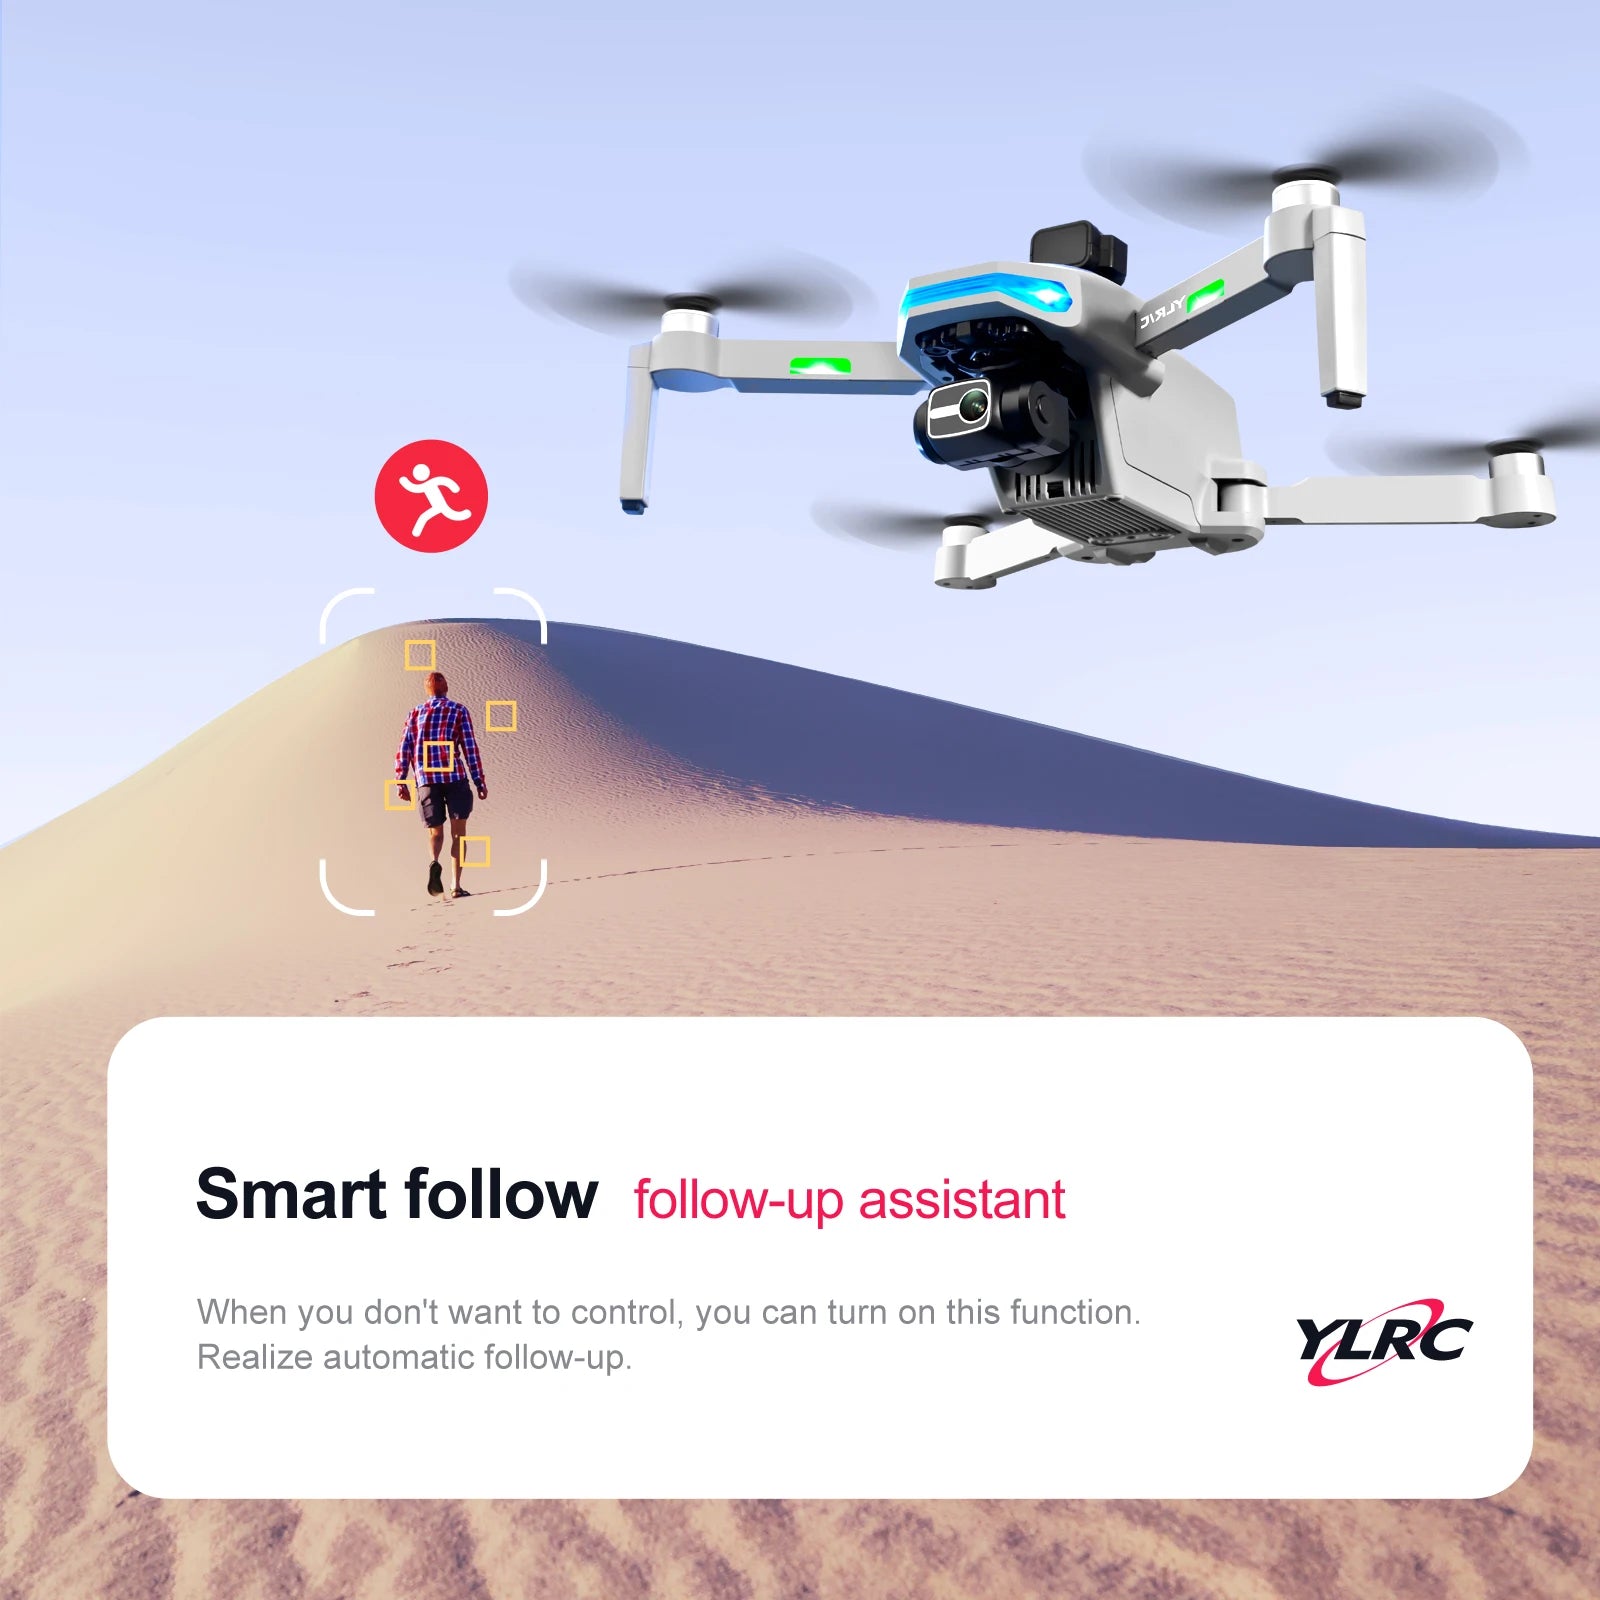 S135 Drone, YLRC Jism is a smart follow follow-up assistant .